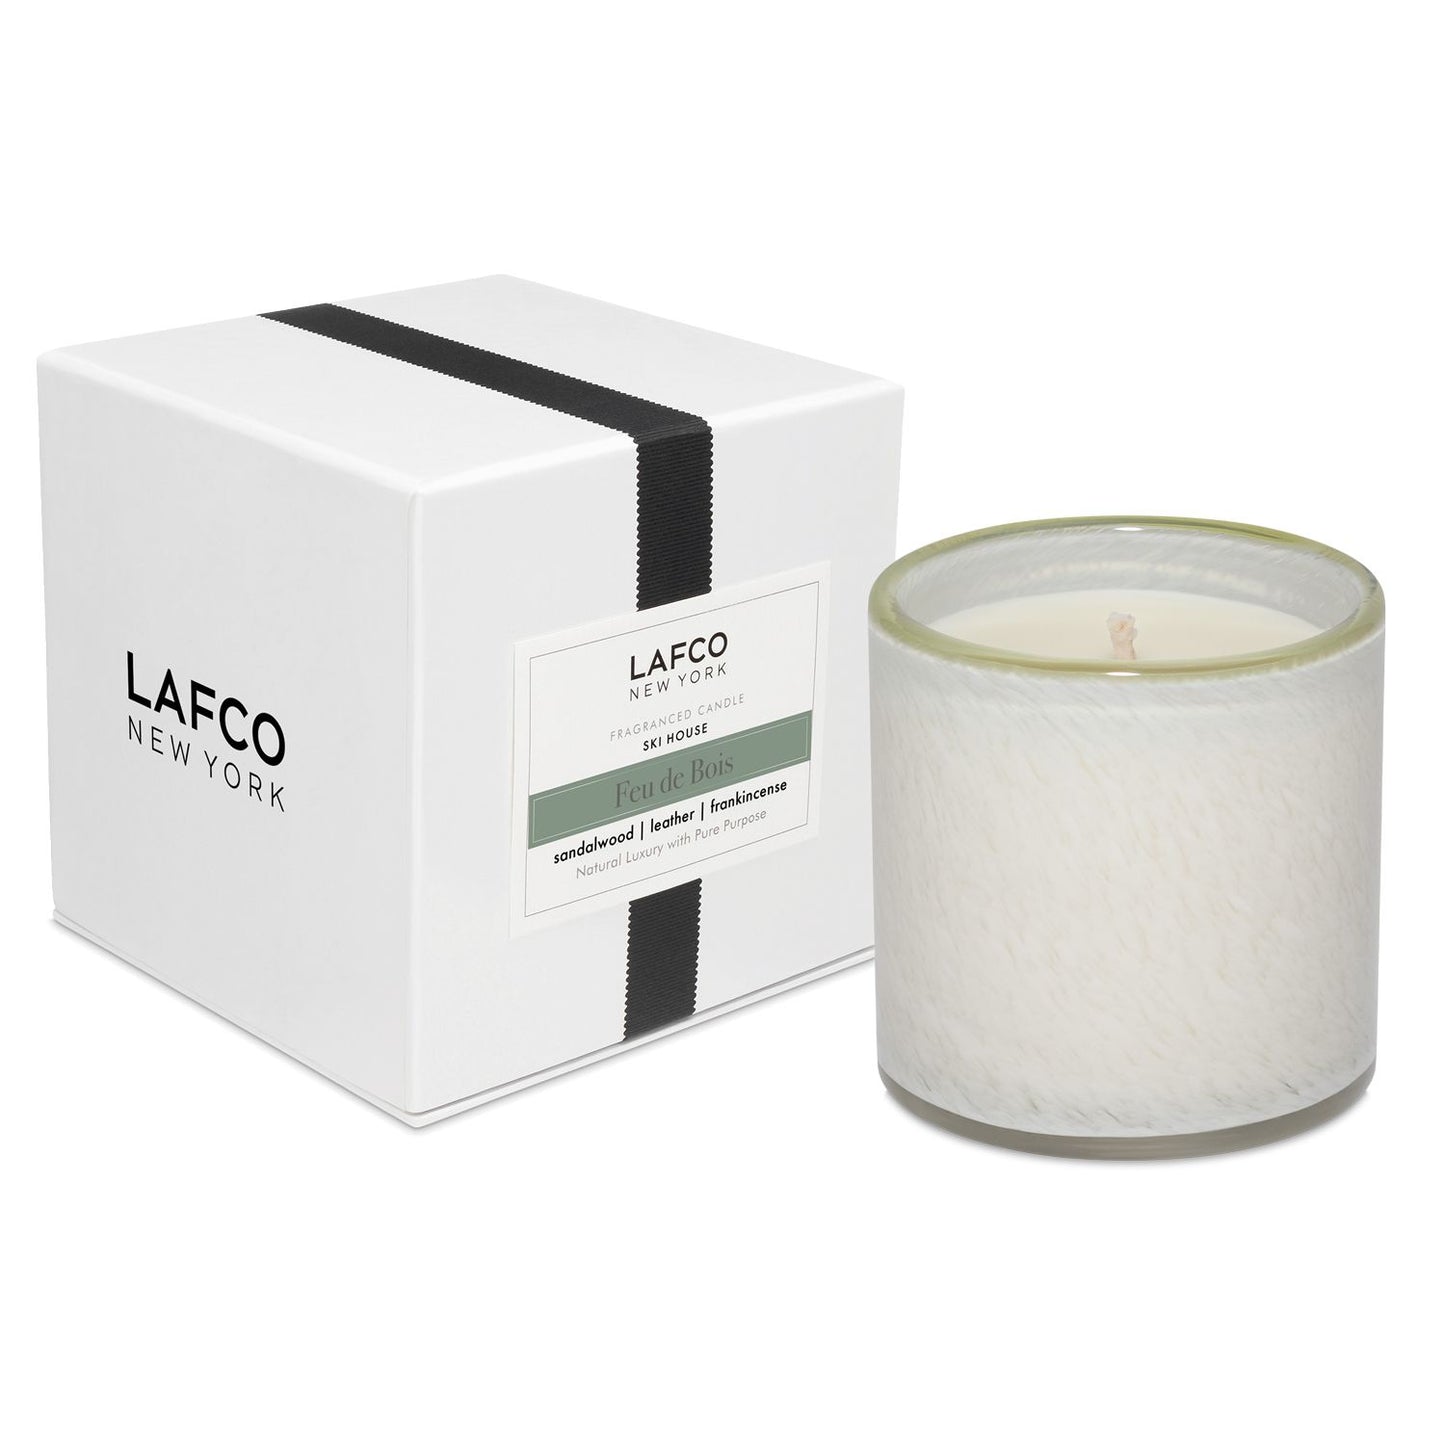 Lafco 6.5oz Candle